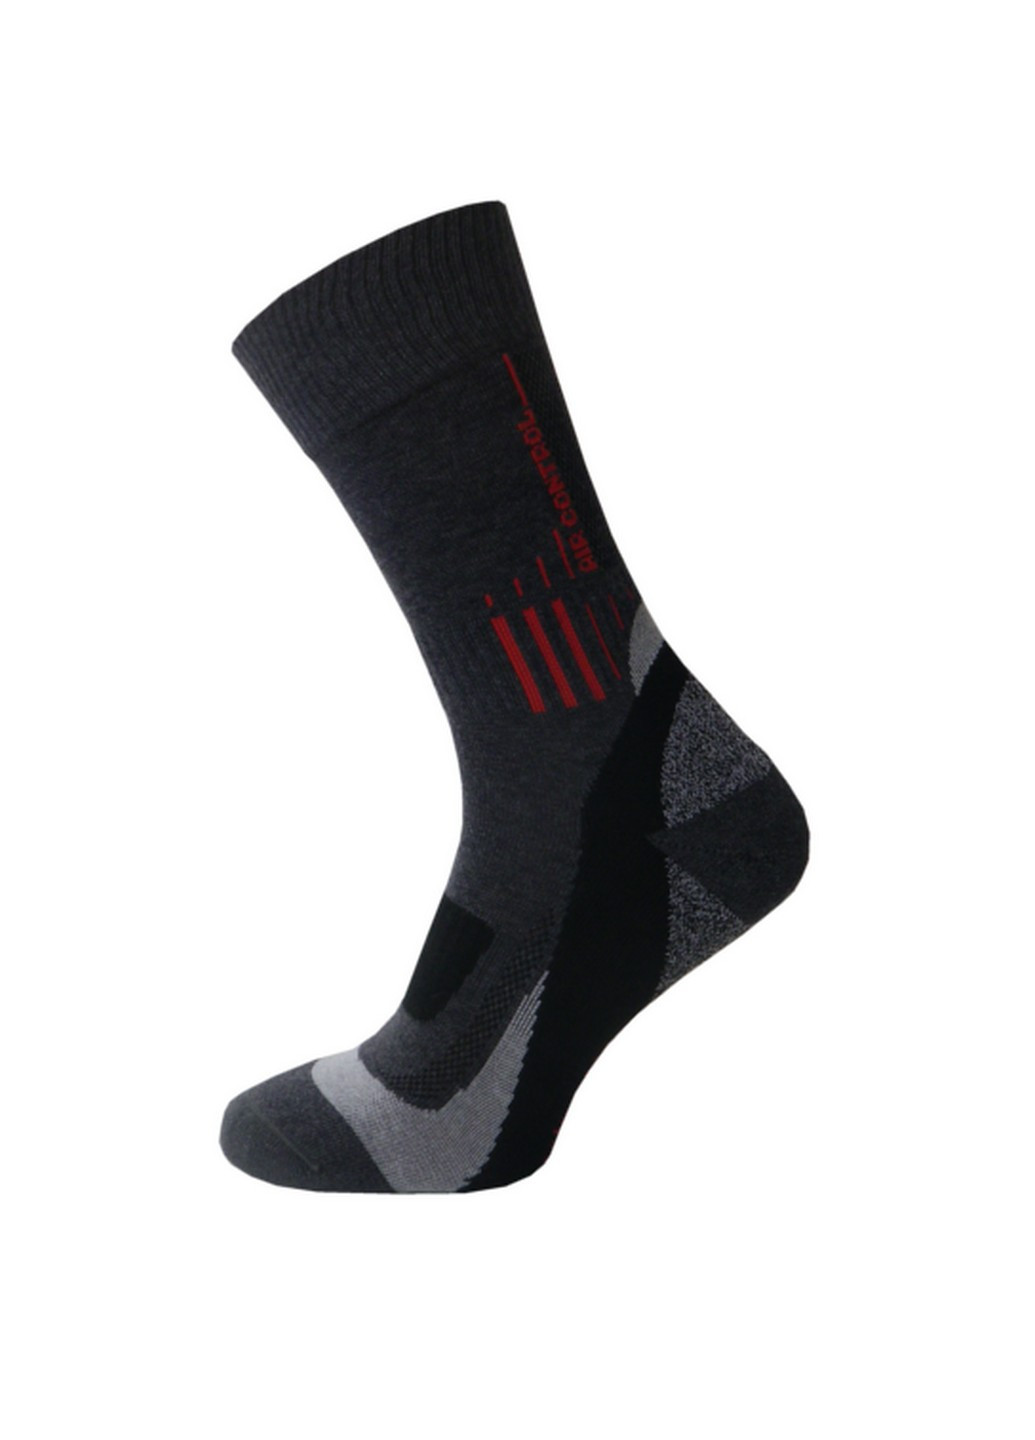 Мужские спортивные треккинговые носки (7207) 39-41 Sesto Senso (254456018)